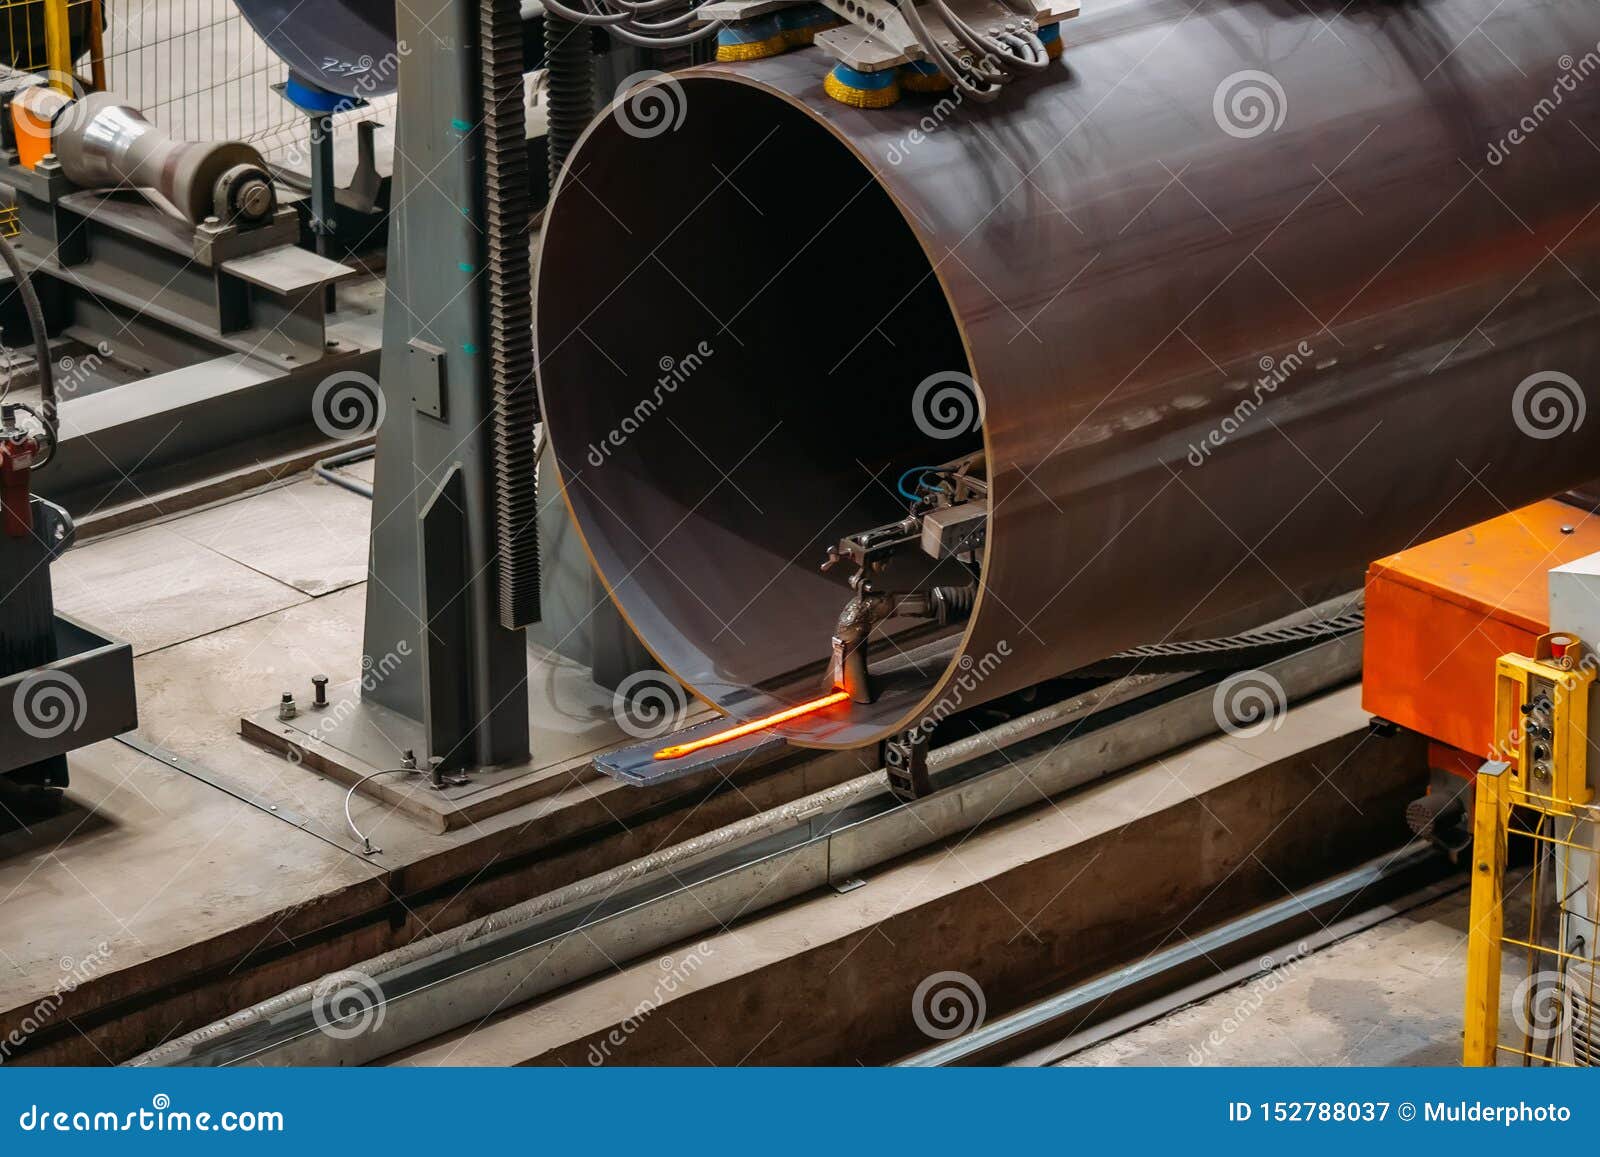 steel pipe internal seam welding by longitudinal tack welding machine